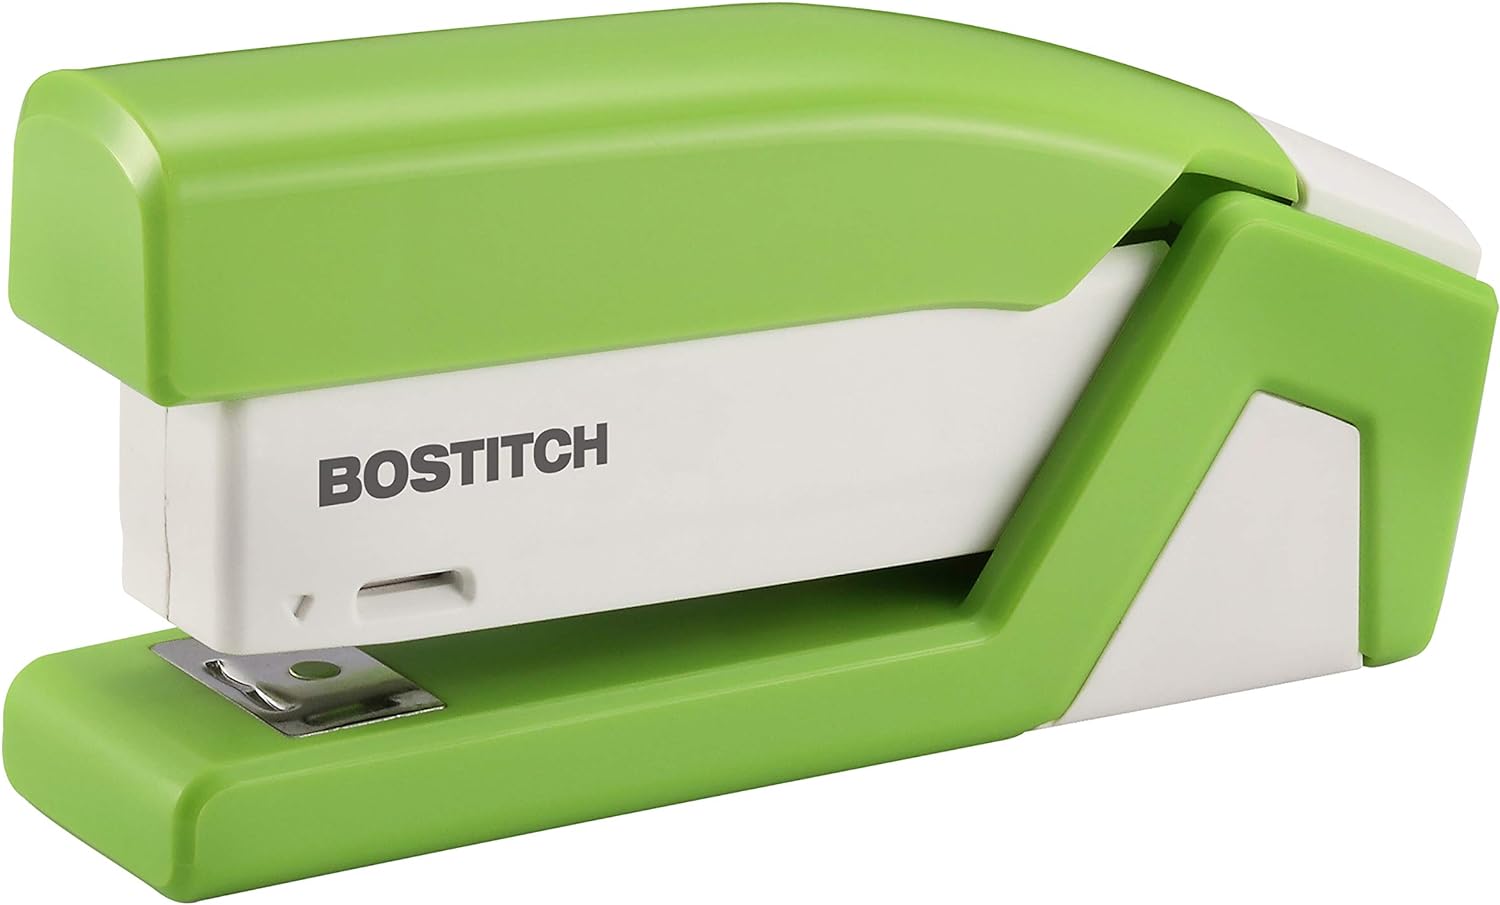 Bostitch InJoy Compact Stapler, 20 Sheet Capacity, Reduced Effort, Jam-Free, Green/White